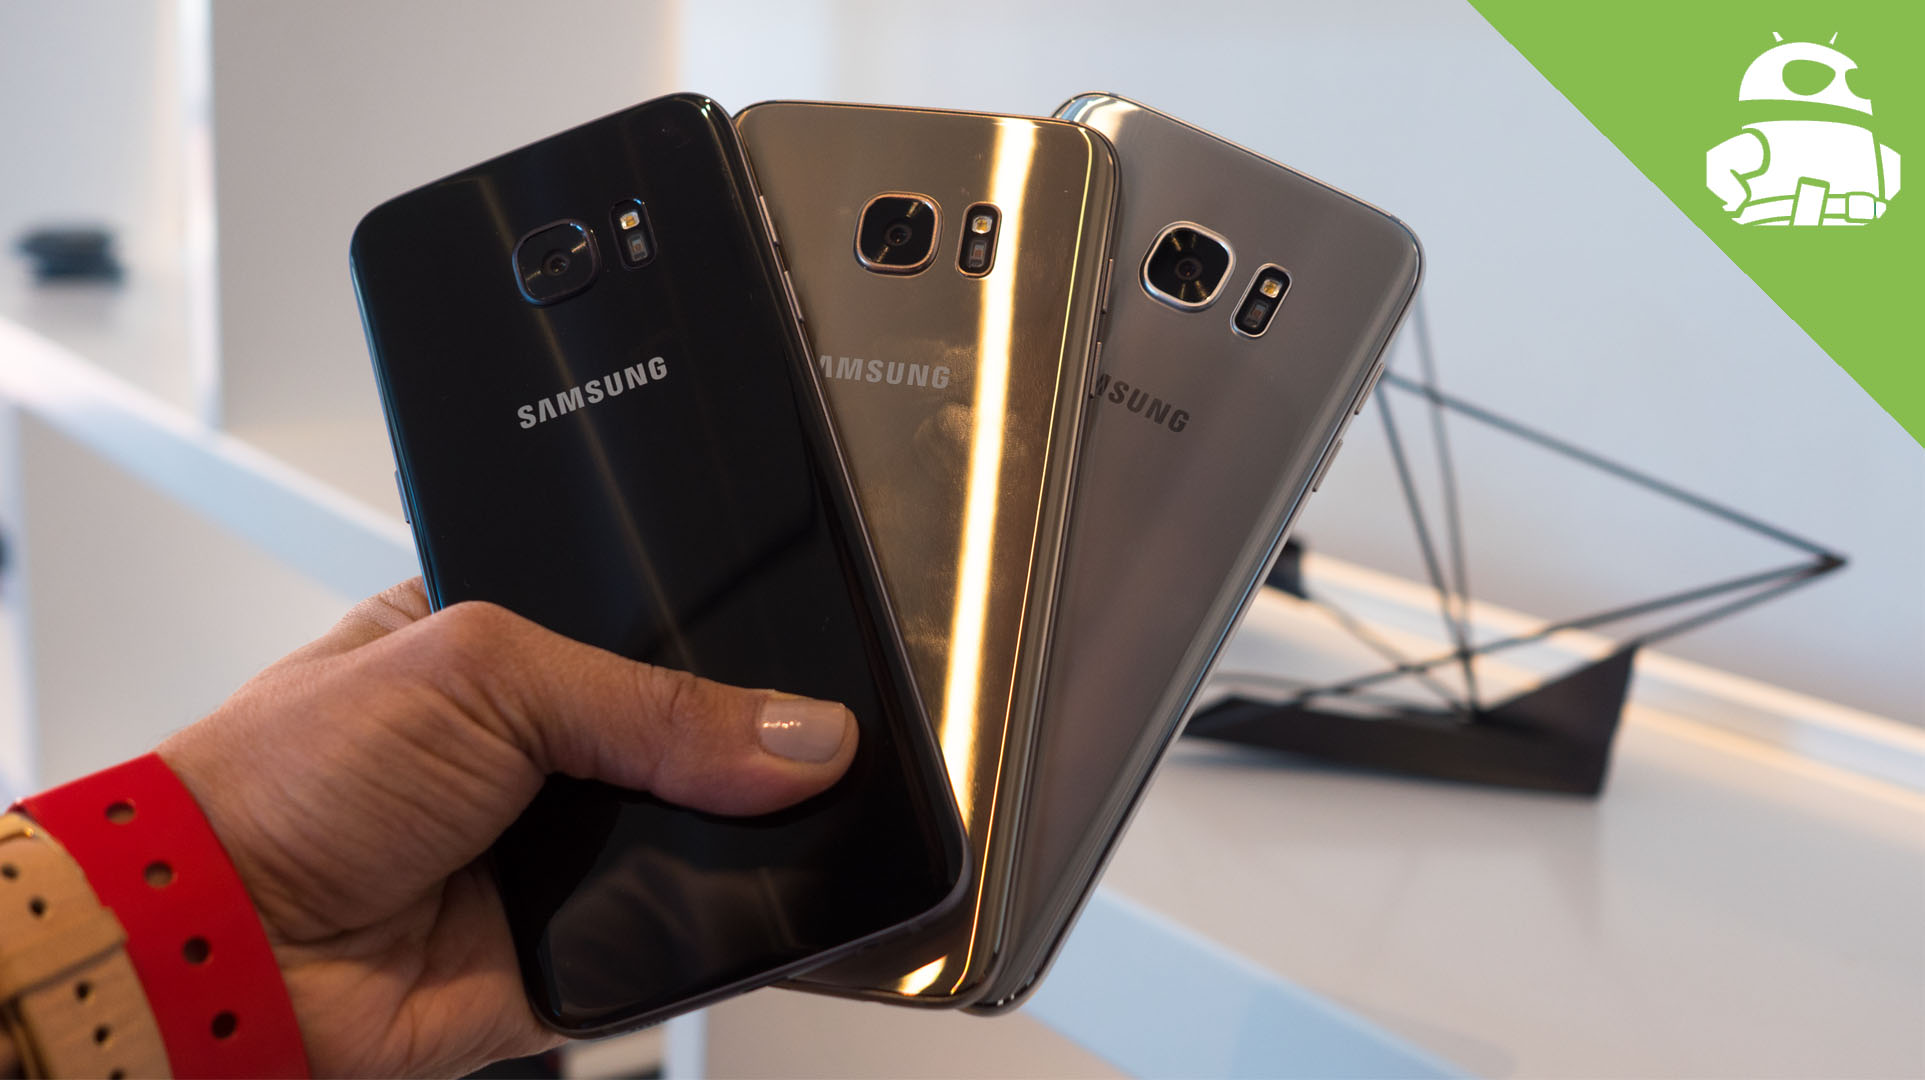 Samsung Galaxy S7 color comparison